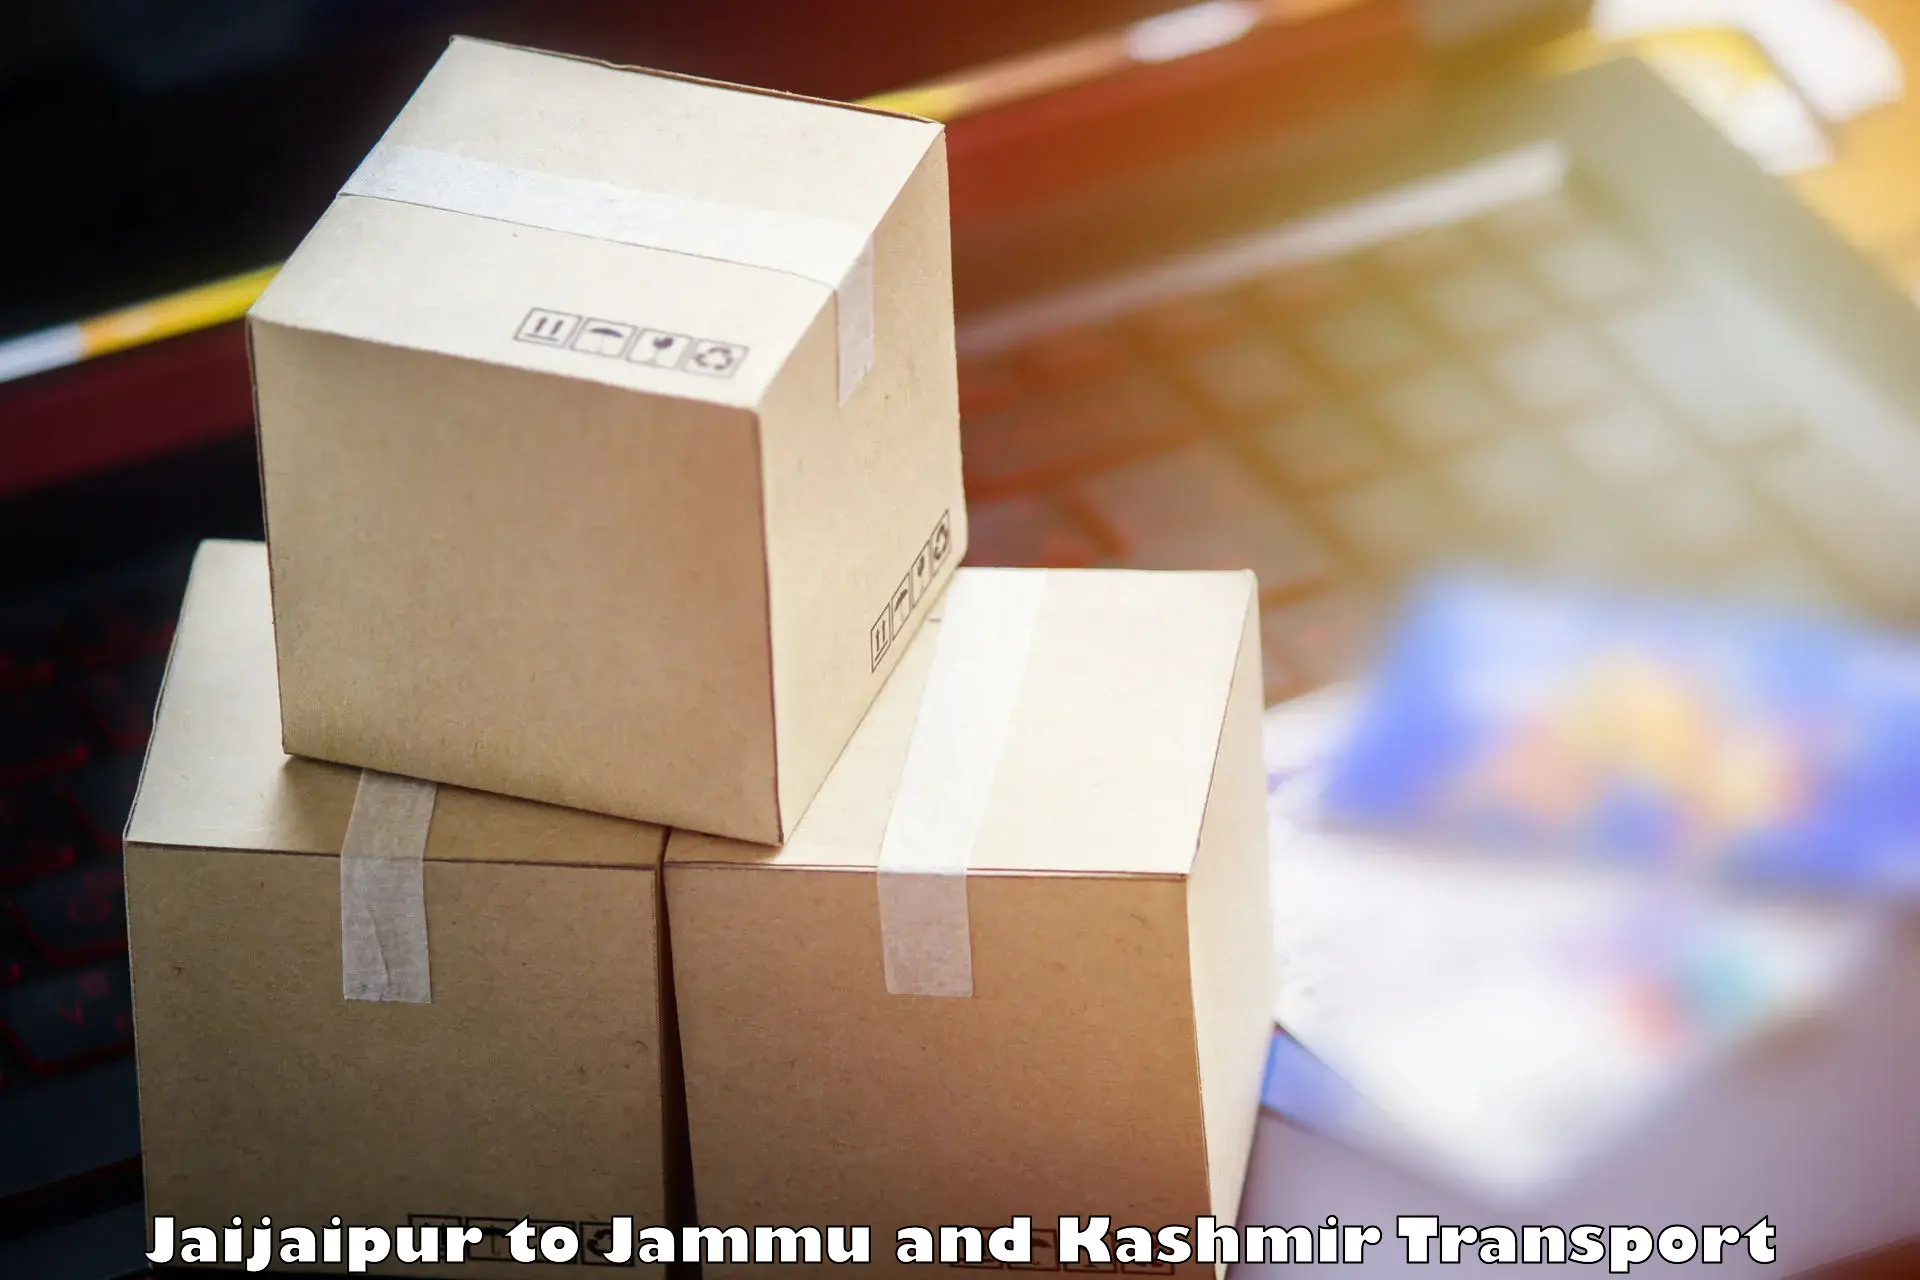 Container transport service Jaijaipur to Budgam